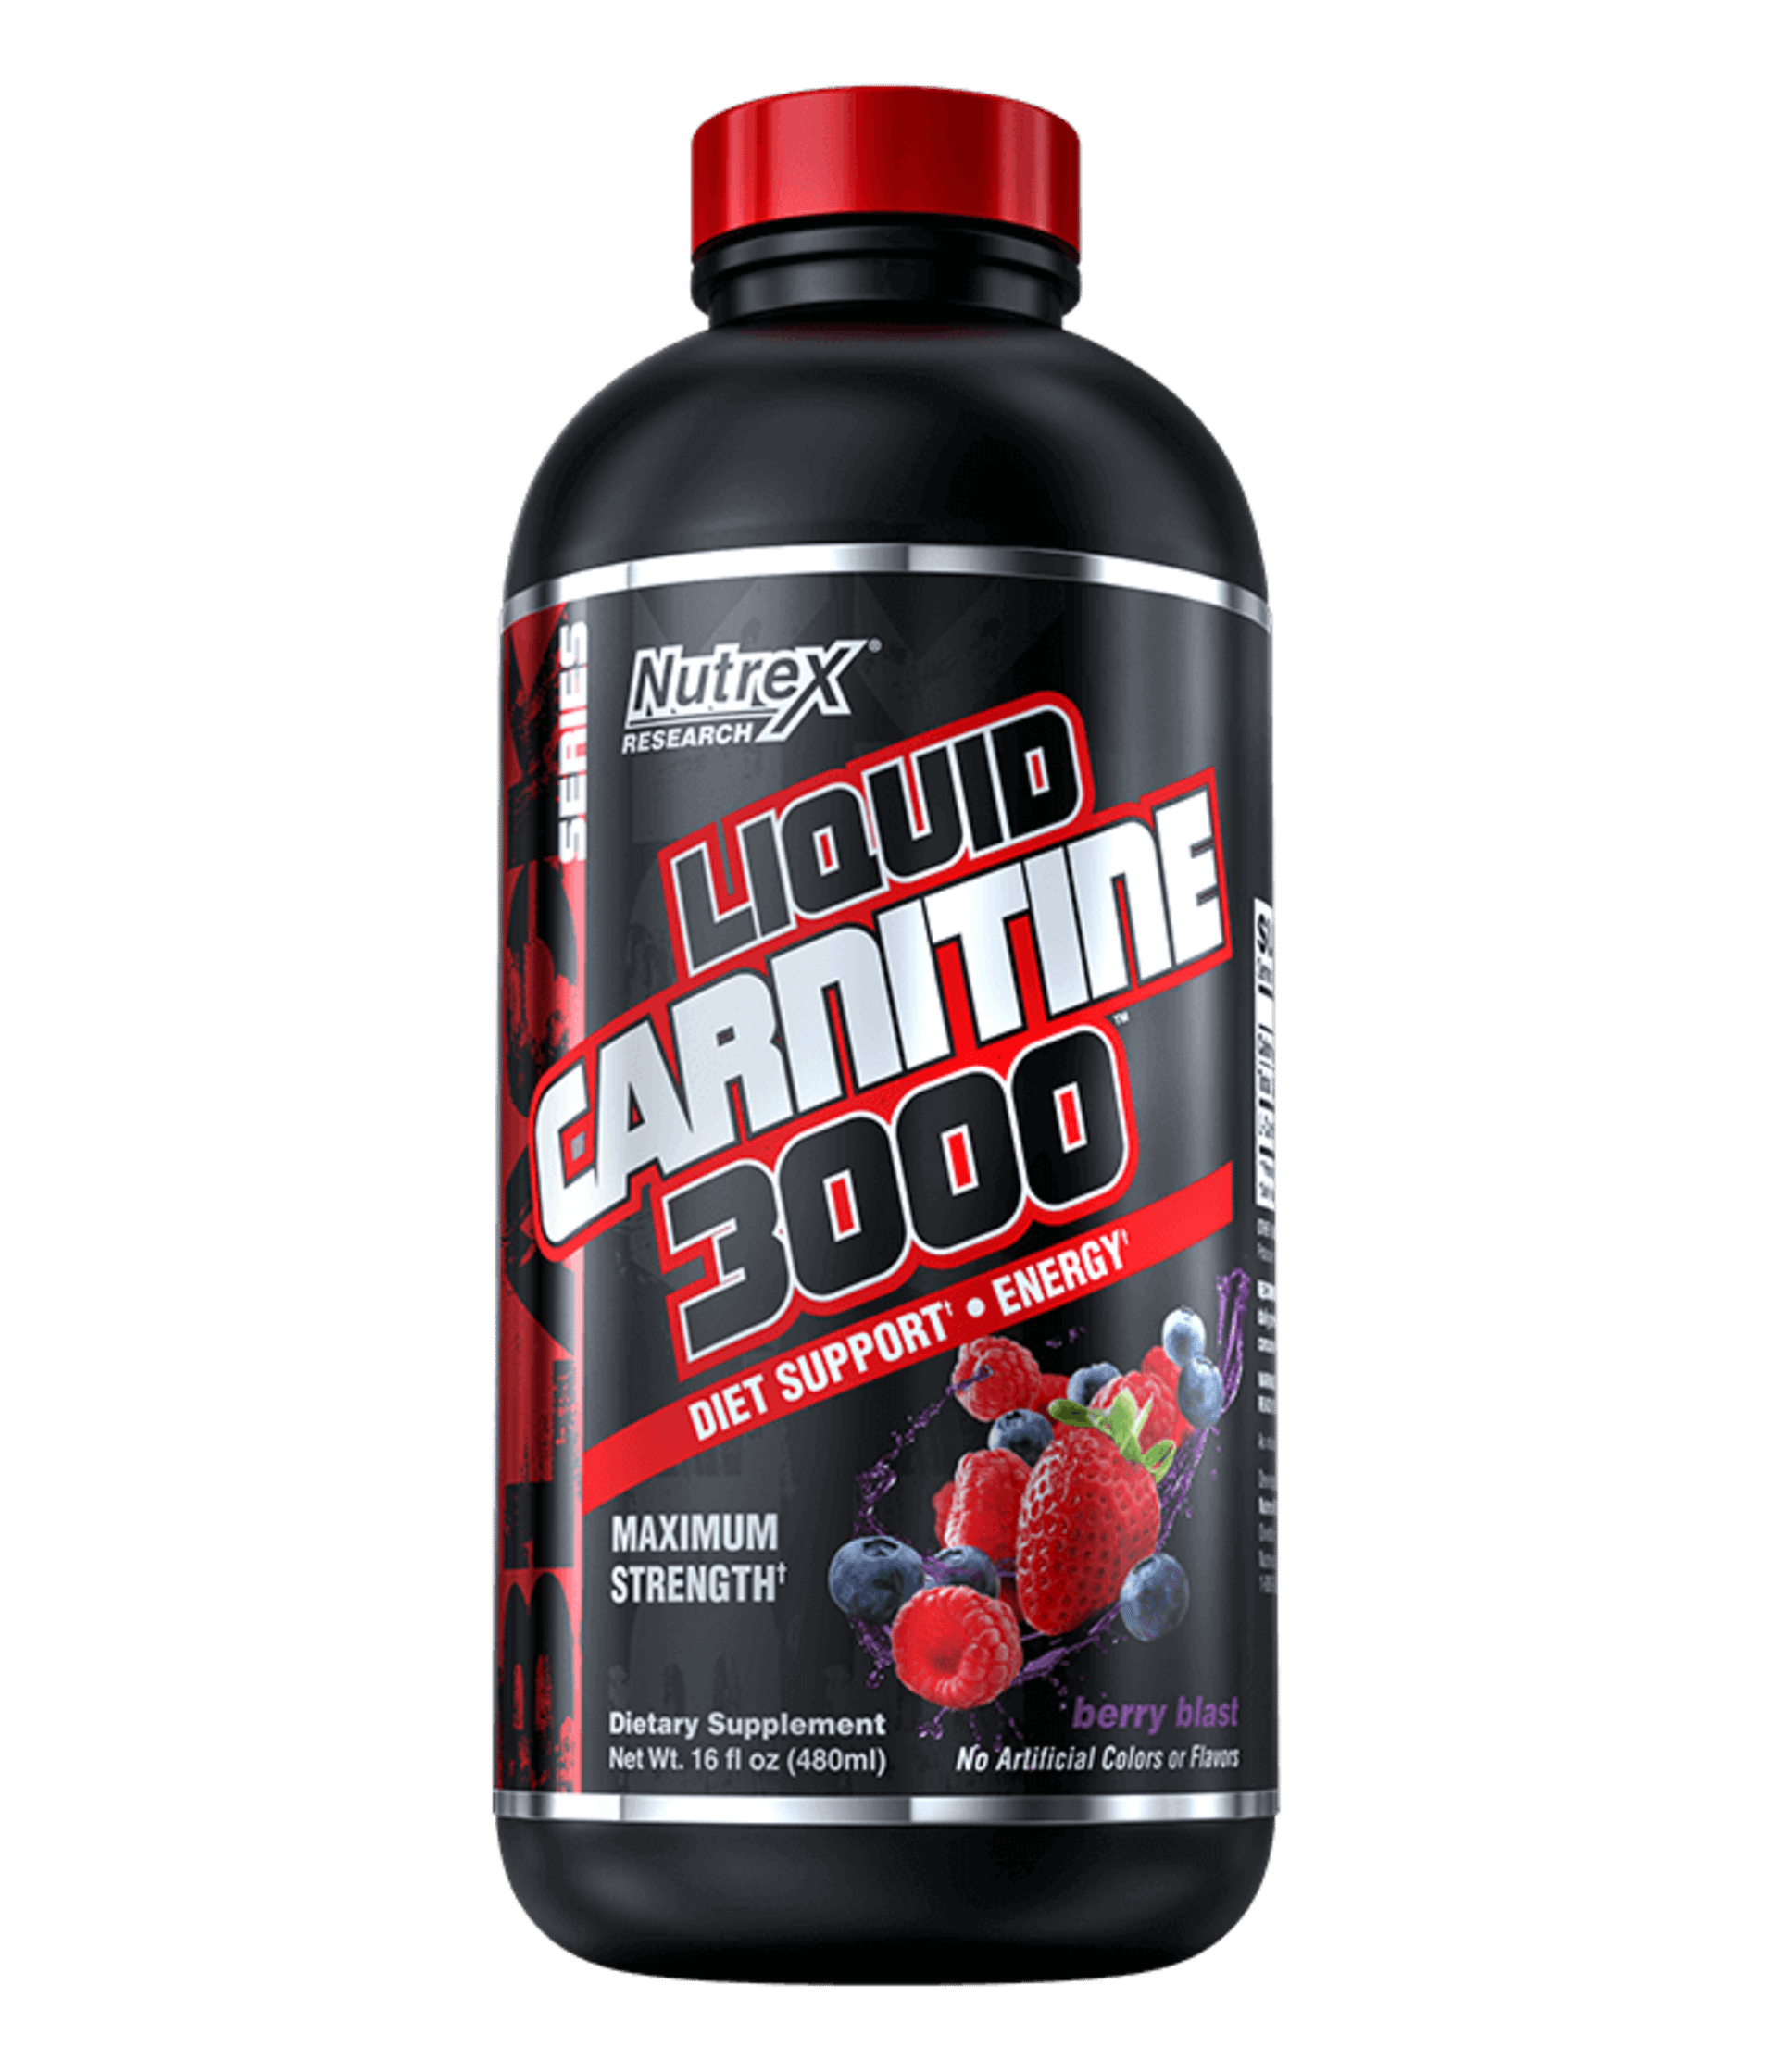 E-shop Nutrex Liquid carnitine 3000 Berry blast 480 ml